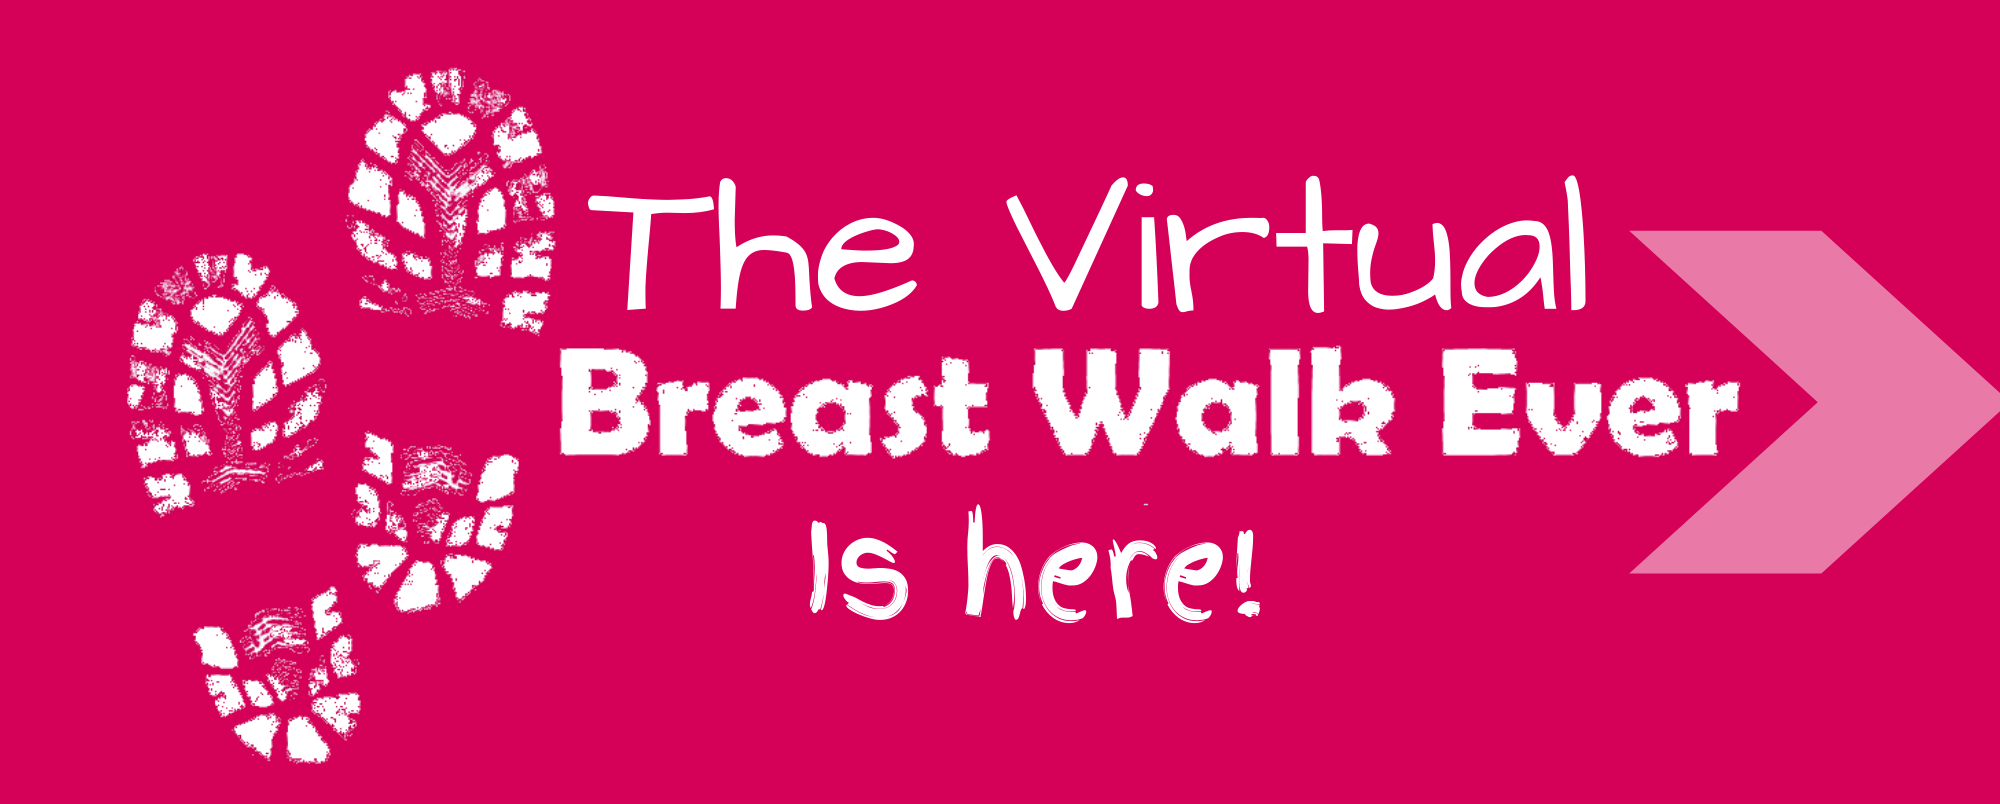 Virtual Breast Walk Ever